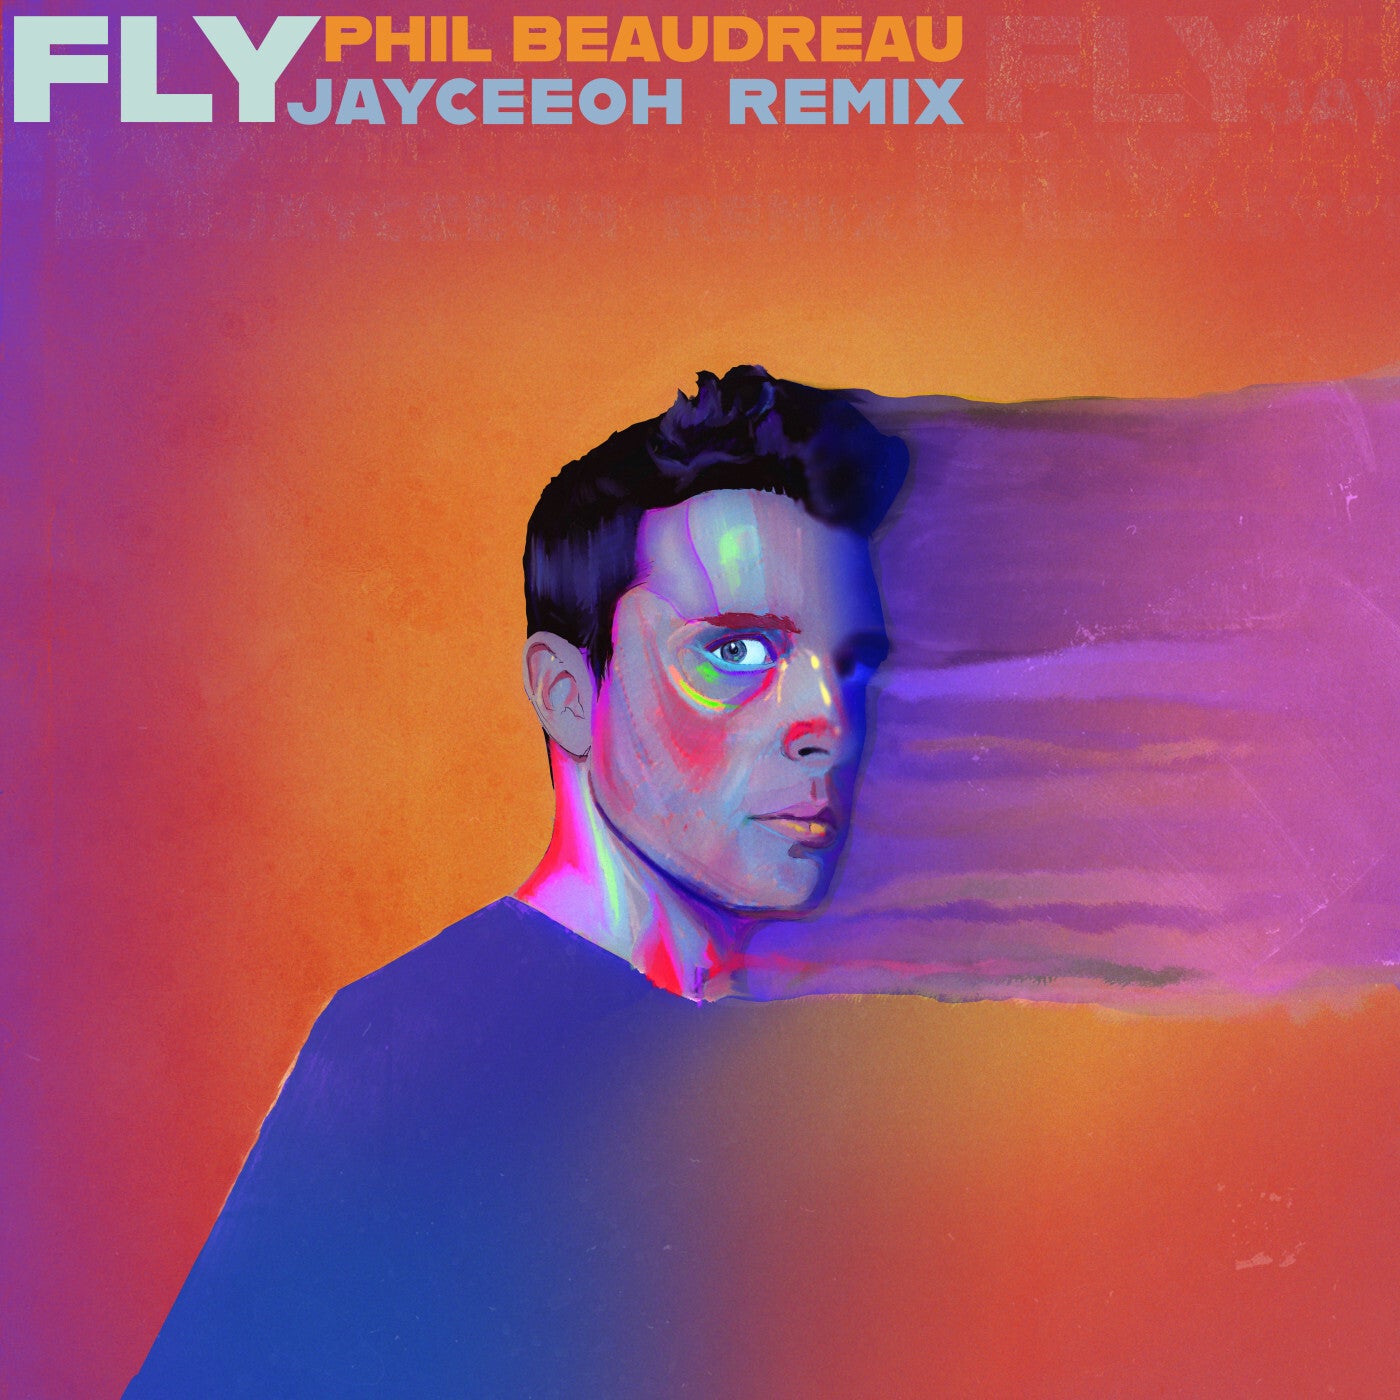 Phil Beaudreau - Fly (Jayceeoh Remix)